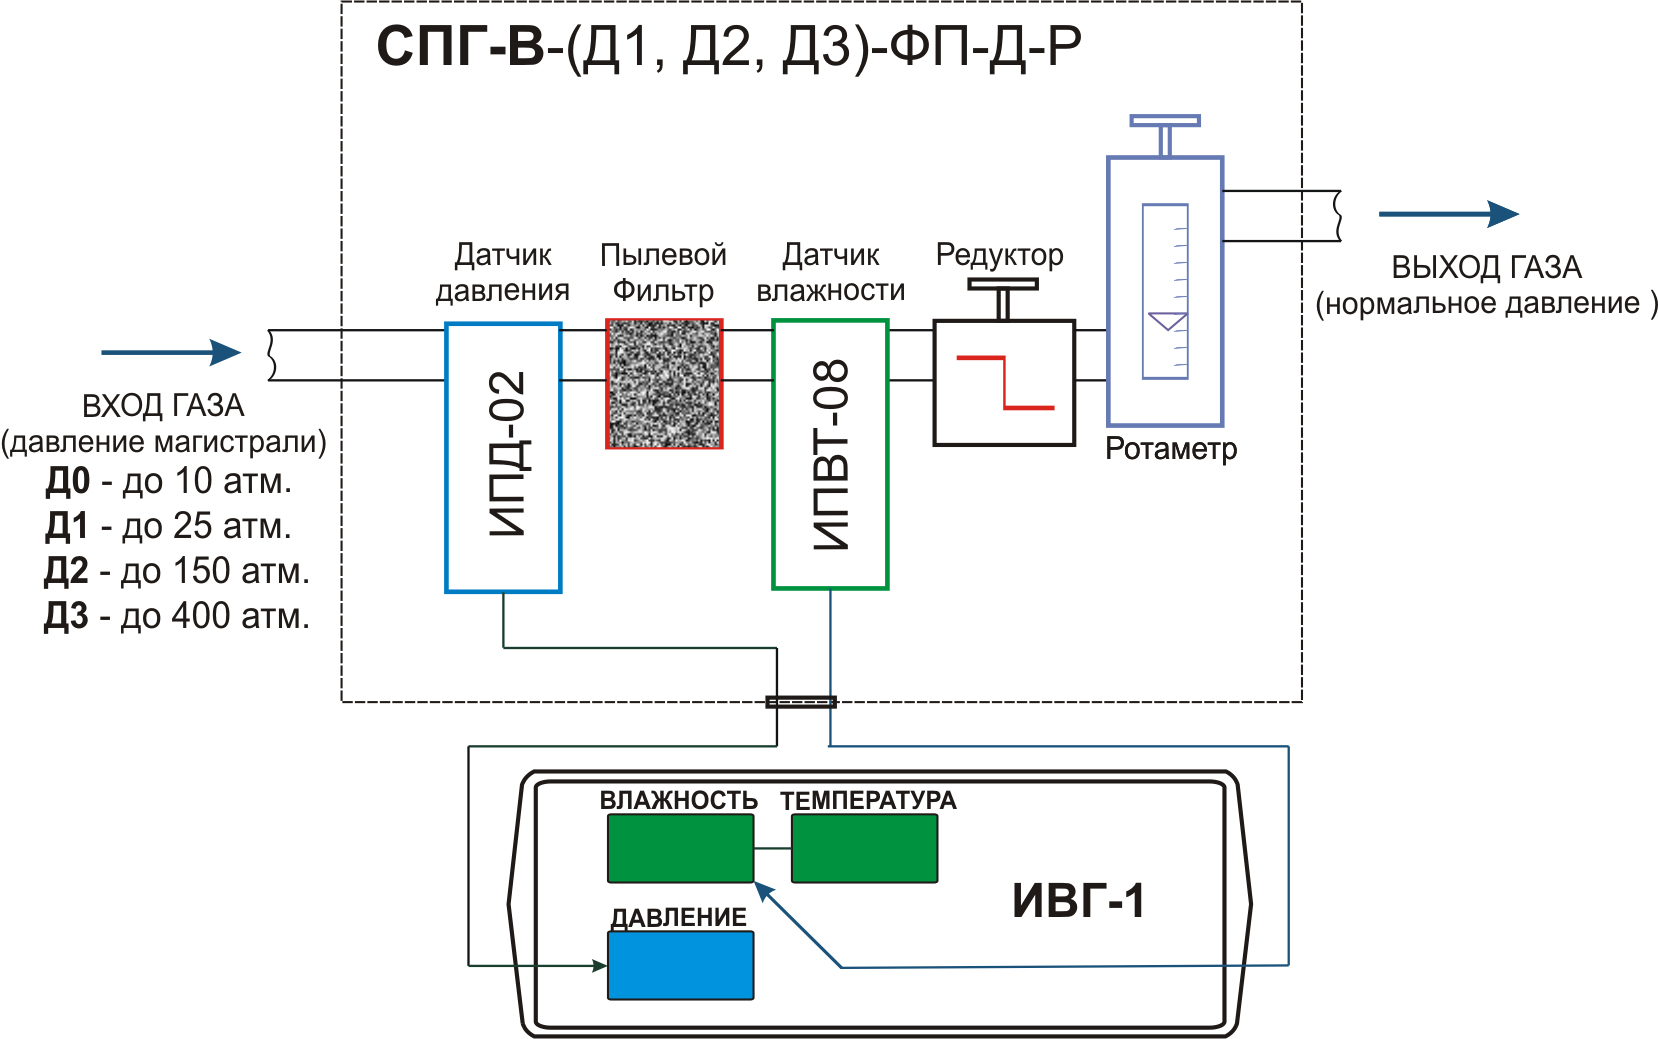 Система пробоподготовки газов СПГ-В-Д3-ФП-Д-Р (N3285)